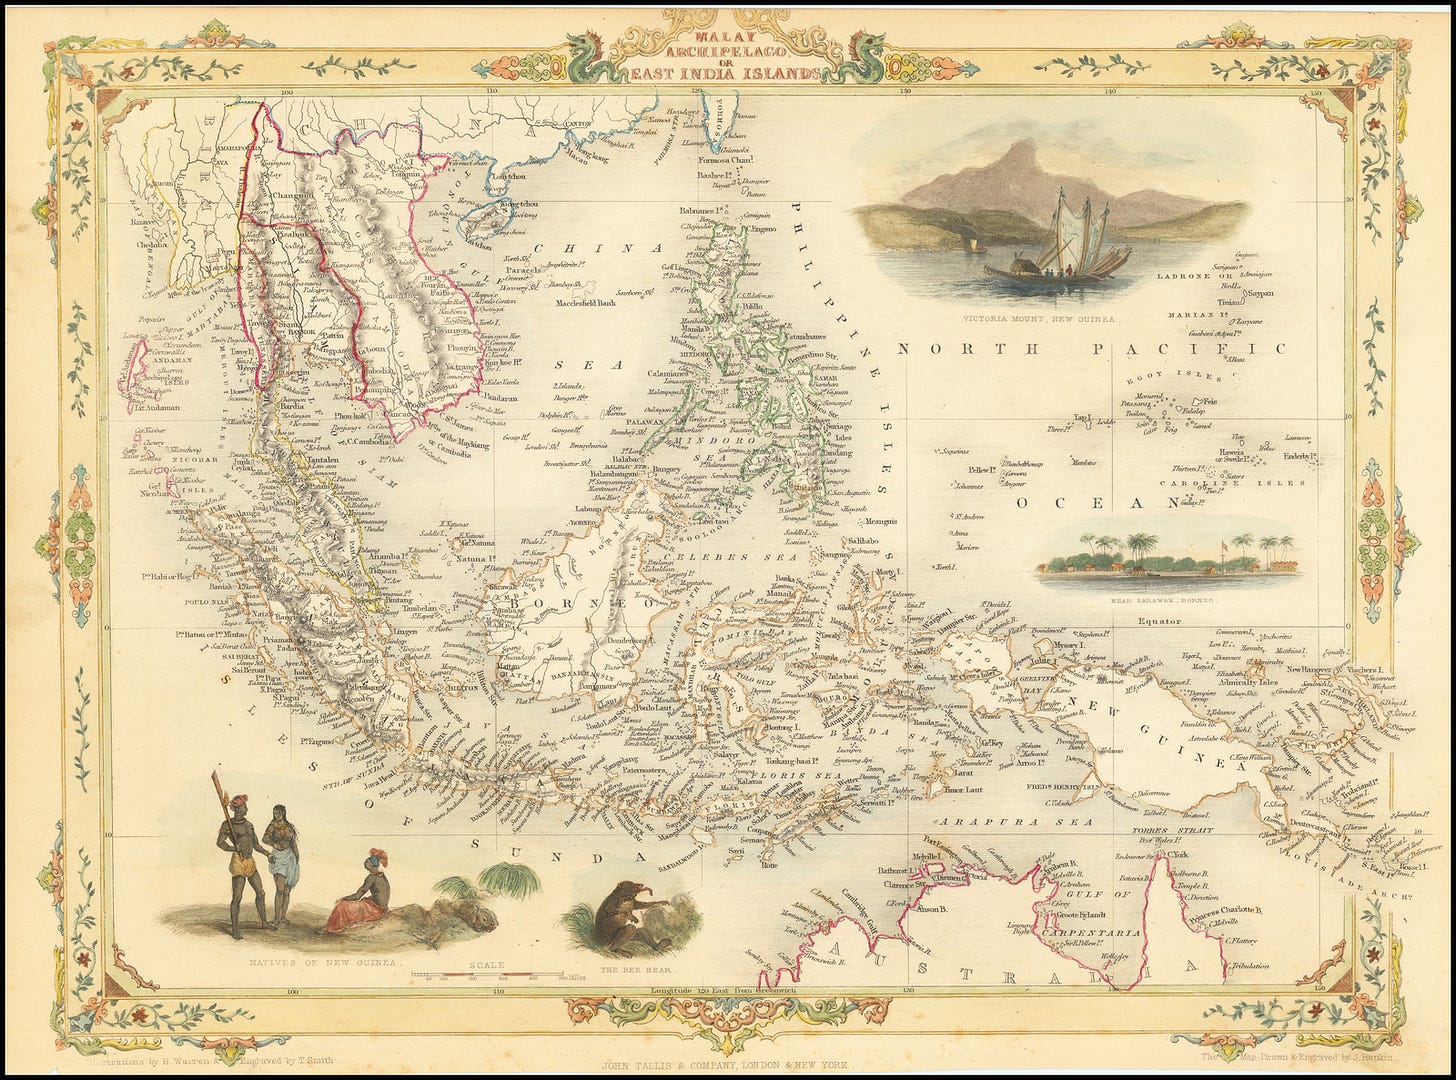 Malay Archipelago, or East India Islands - Barry Lawrence Ruderman Antique  Maps Inc.